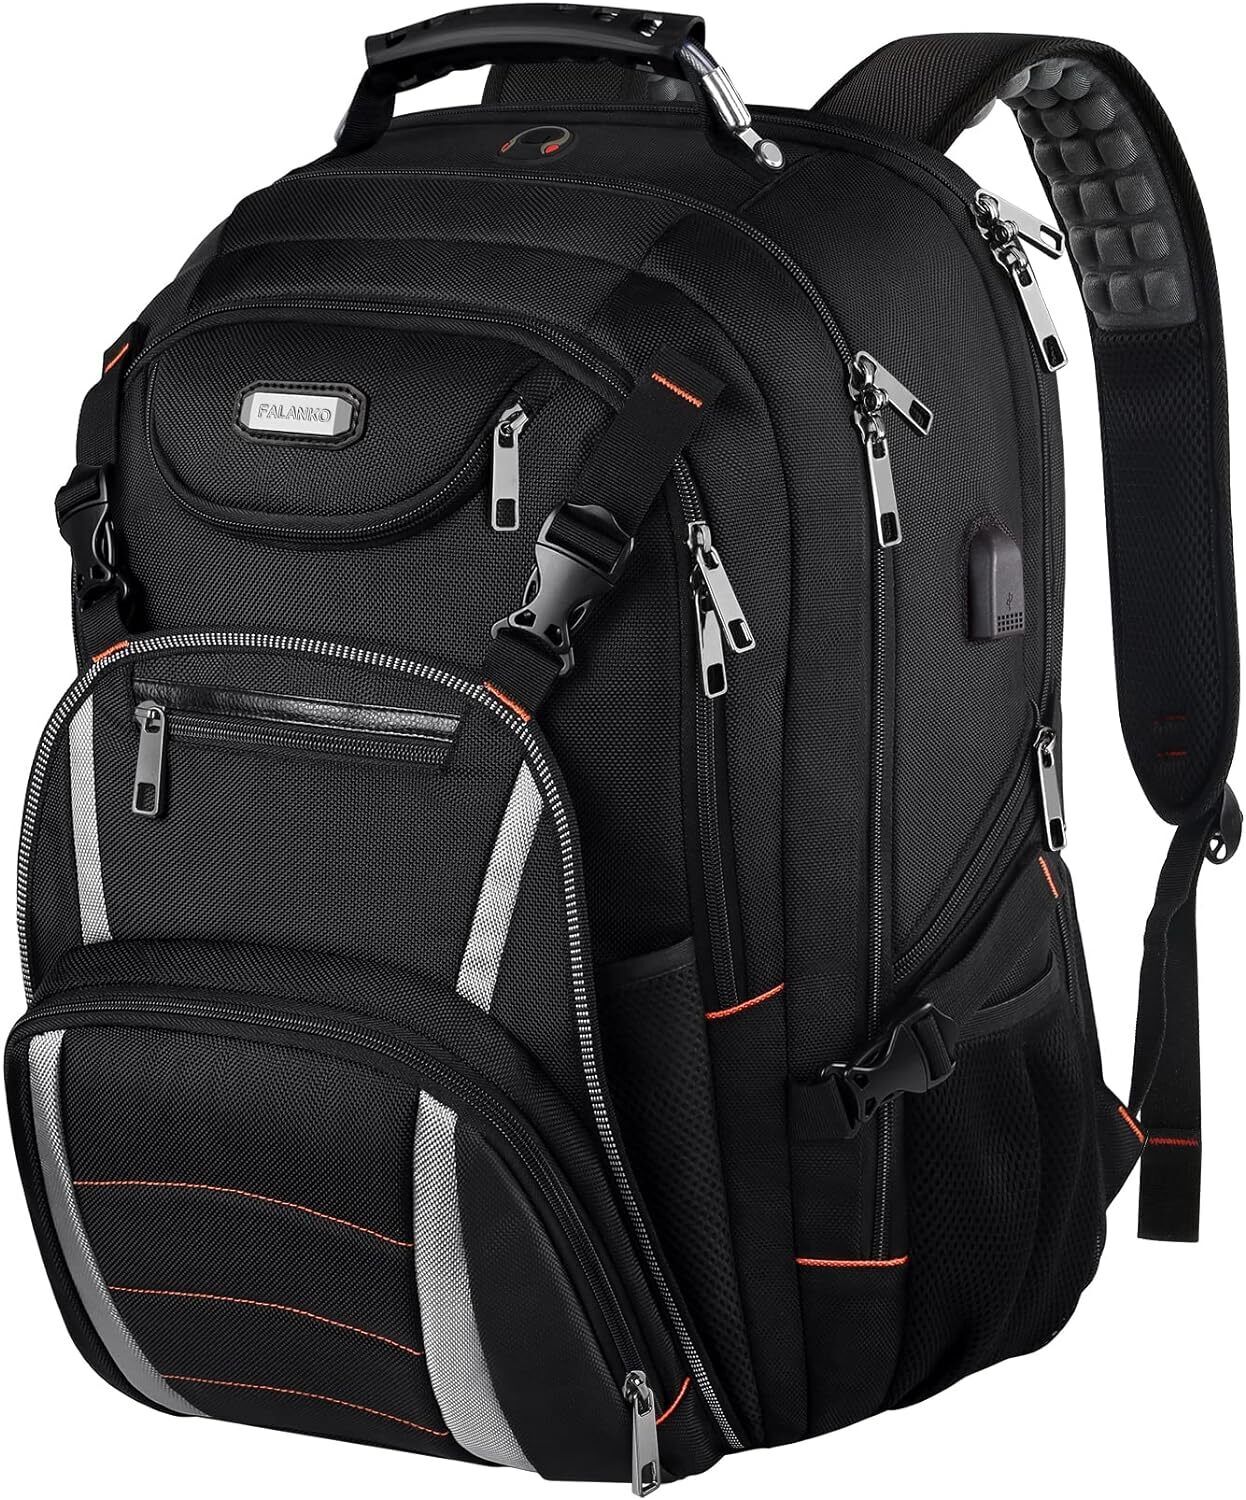 YALIXIAN Travel Laptop Backpack,Extra Large 18.4 Inch 18.4inch-blackgrey 